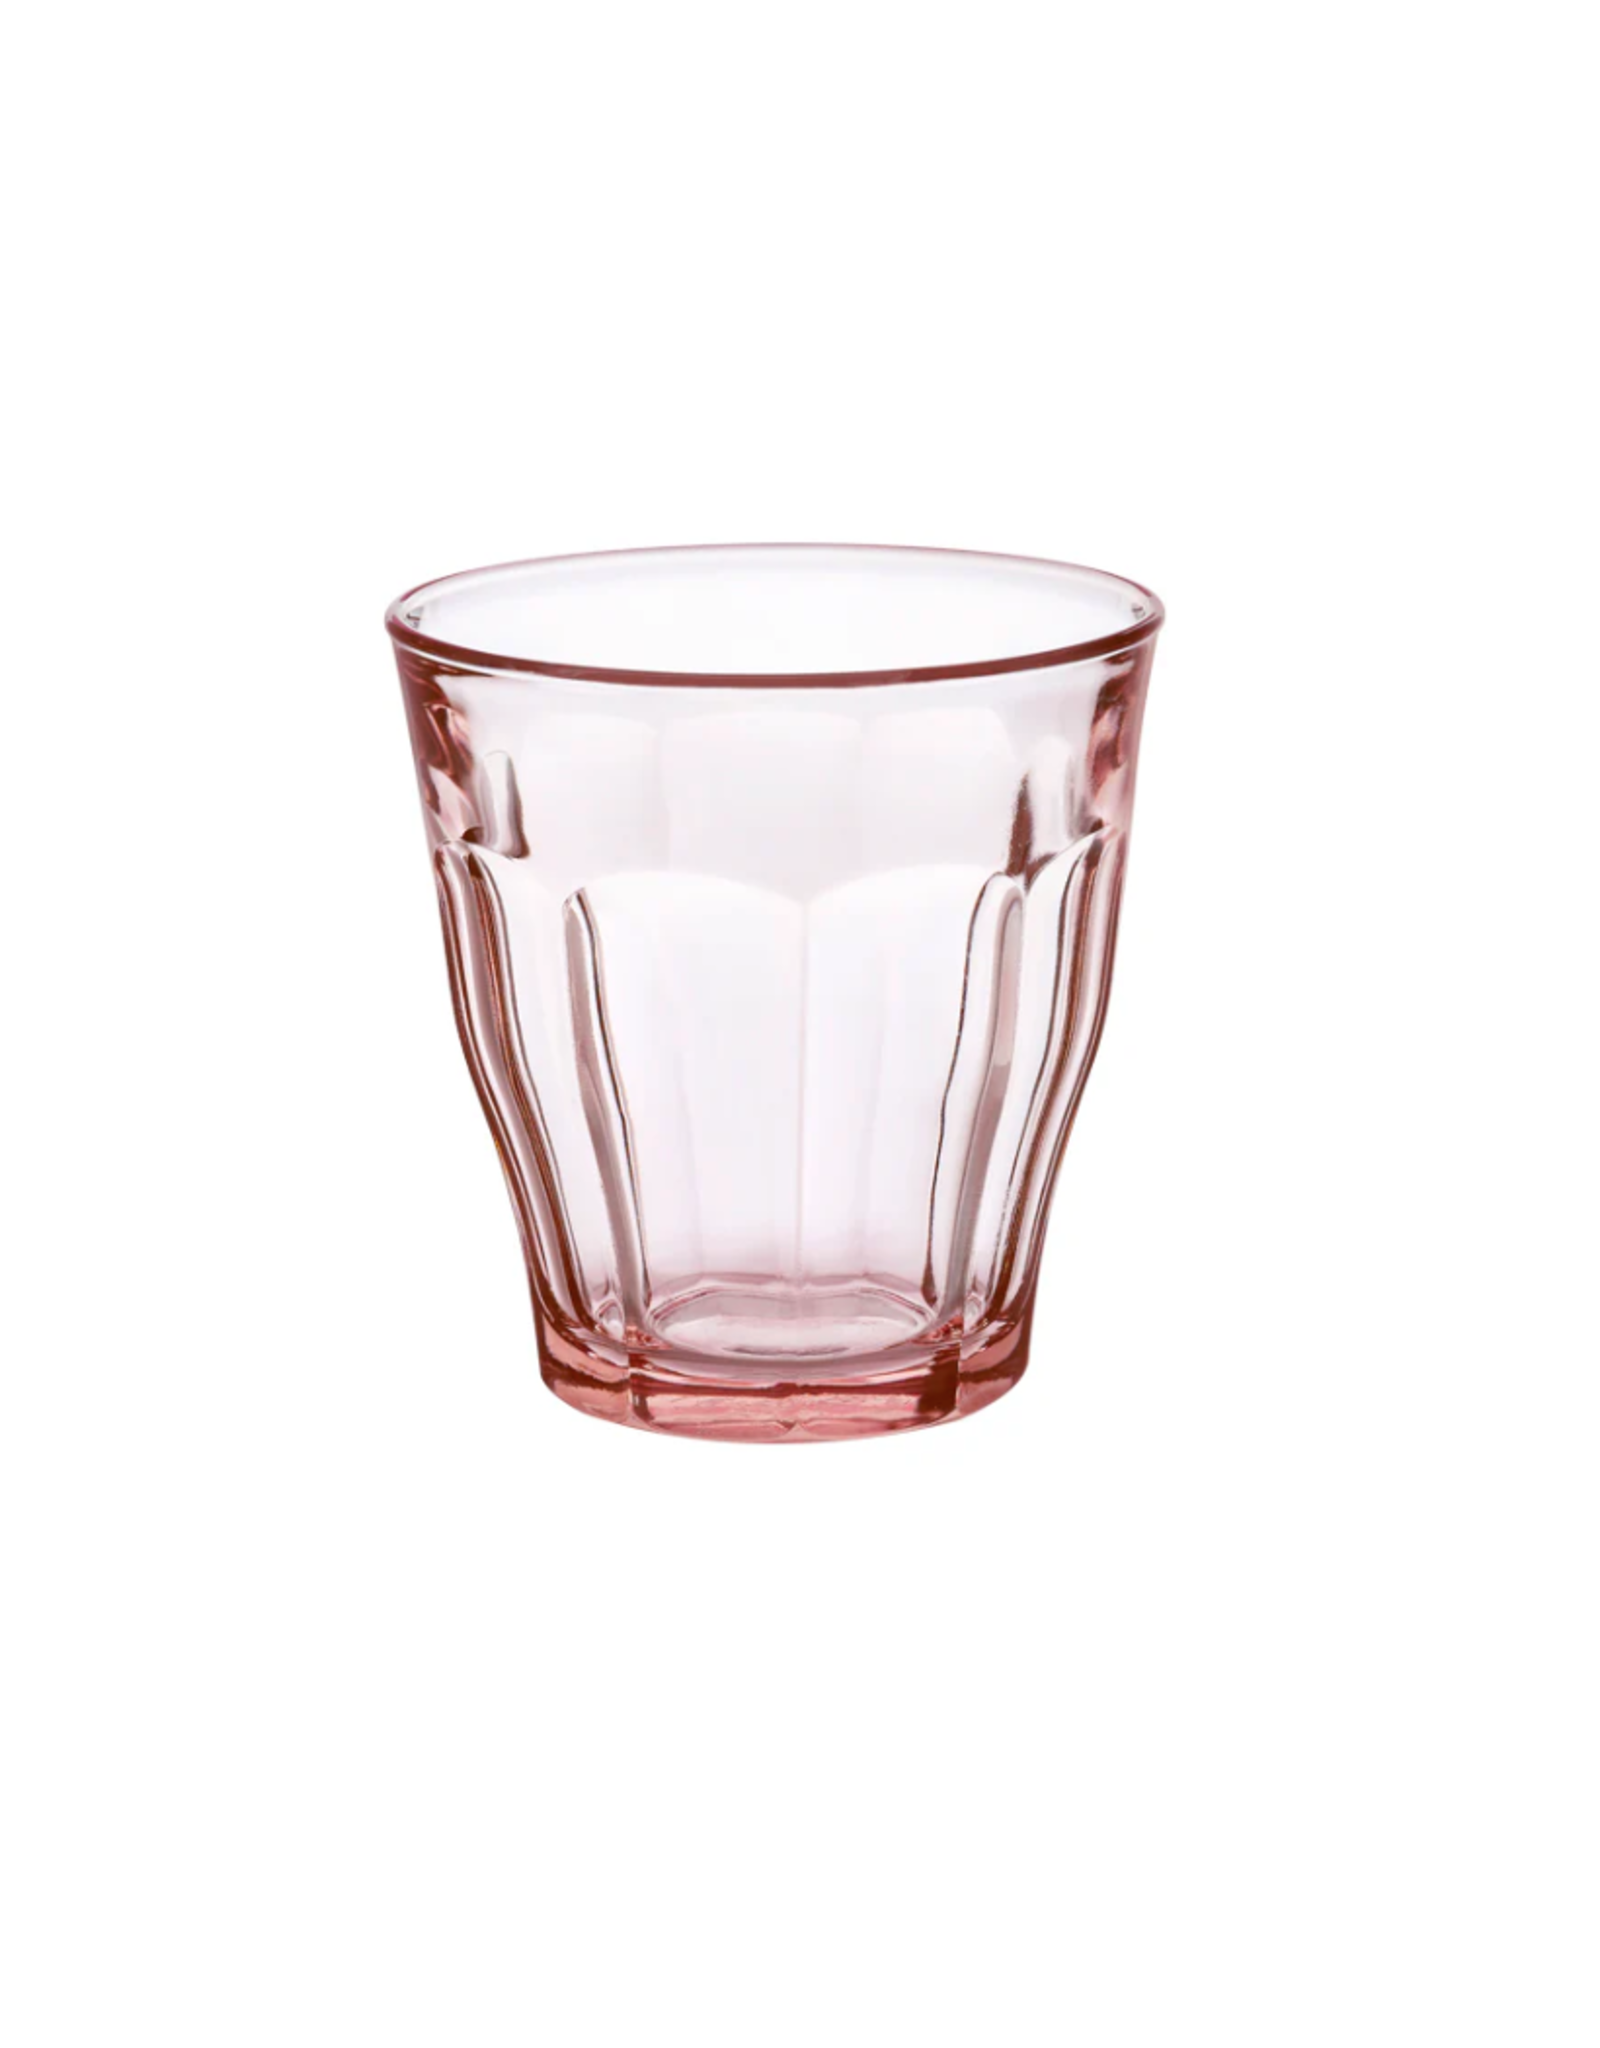 ICM - Duralex Glass Tumbler / Picardie, Rose, 250ml